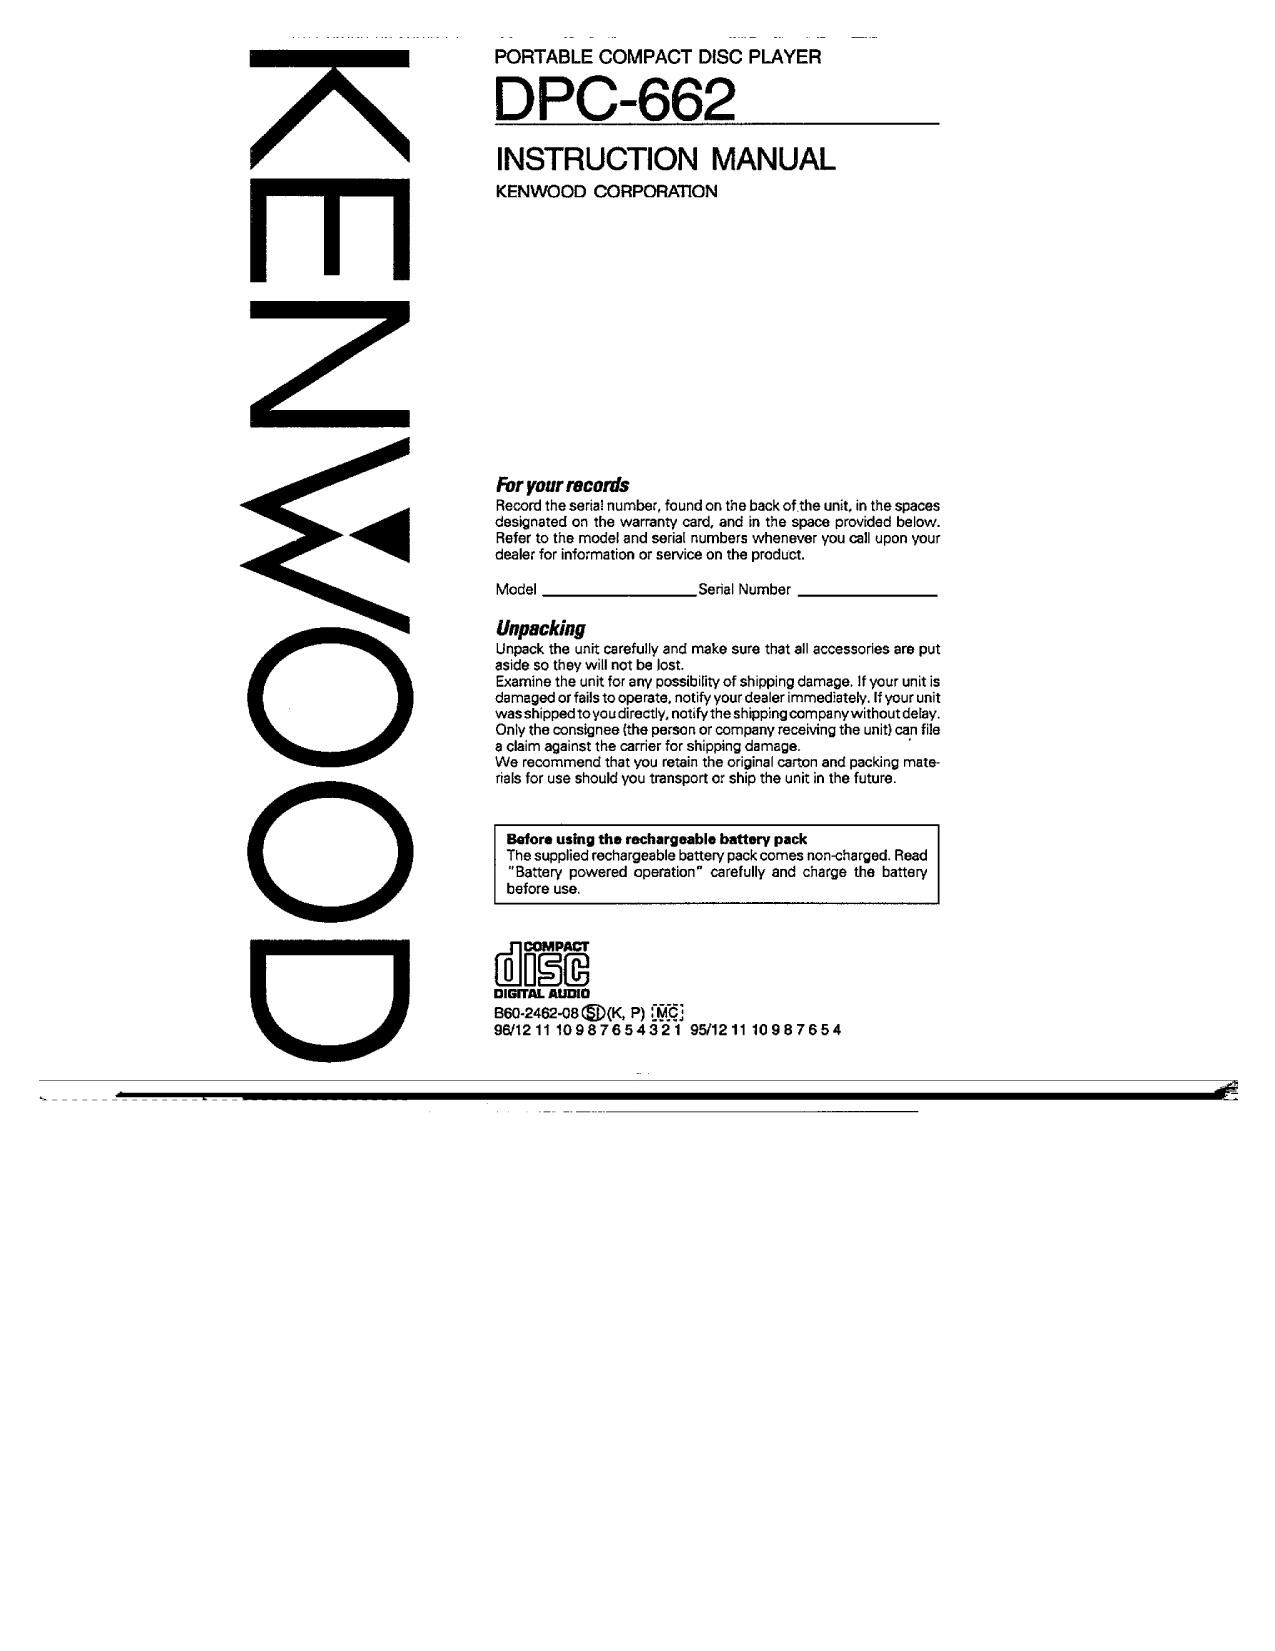 Kenwood DPC 662 Owners Manual